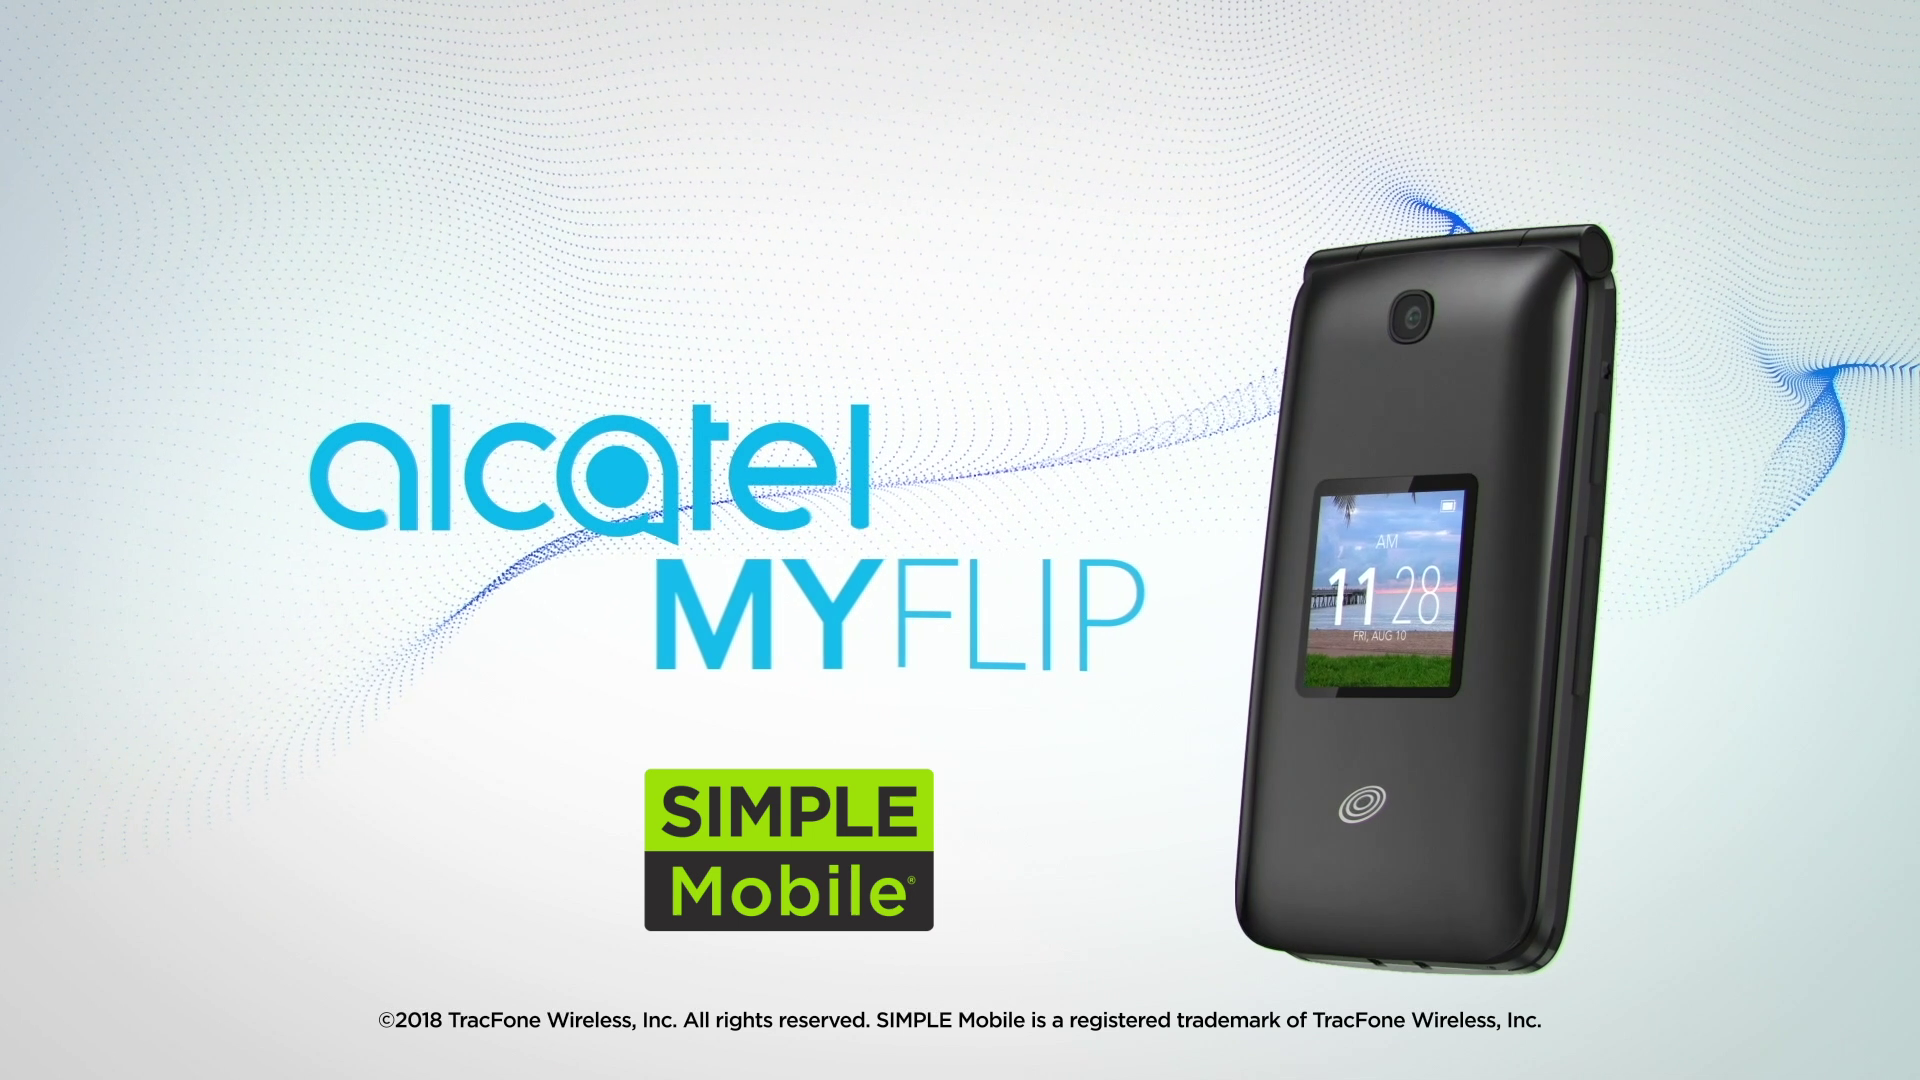 Simple Mobile Alcatel MyFlip, 4GB, Black- Prepaid Phone - image 2 of 12